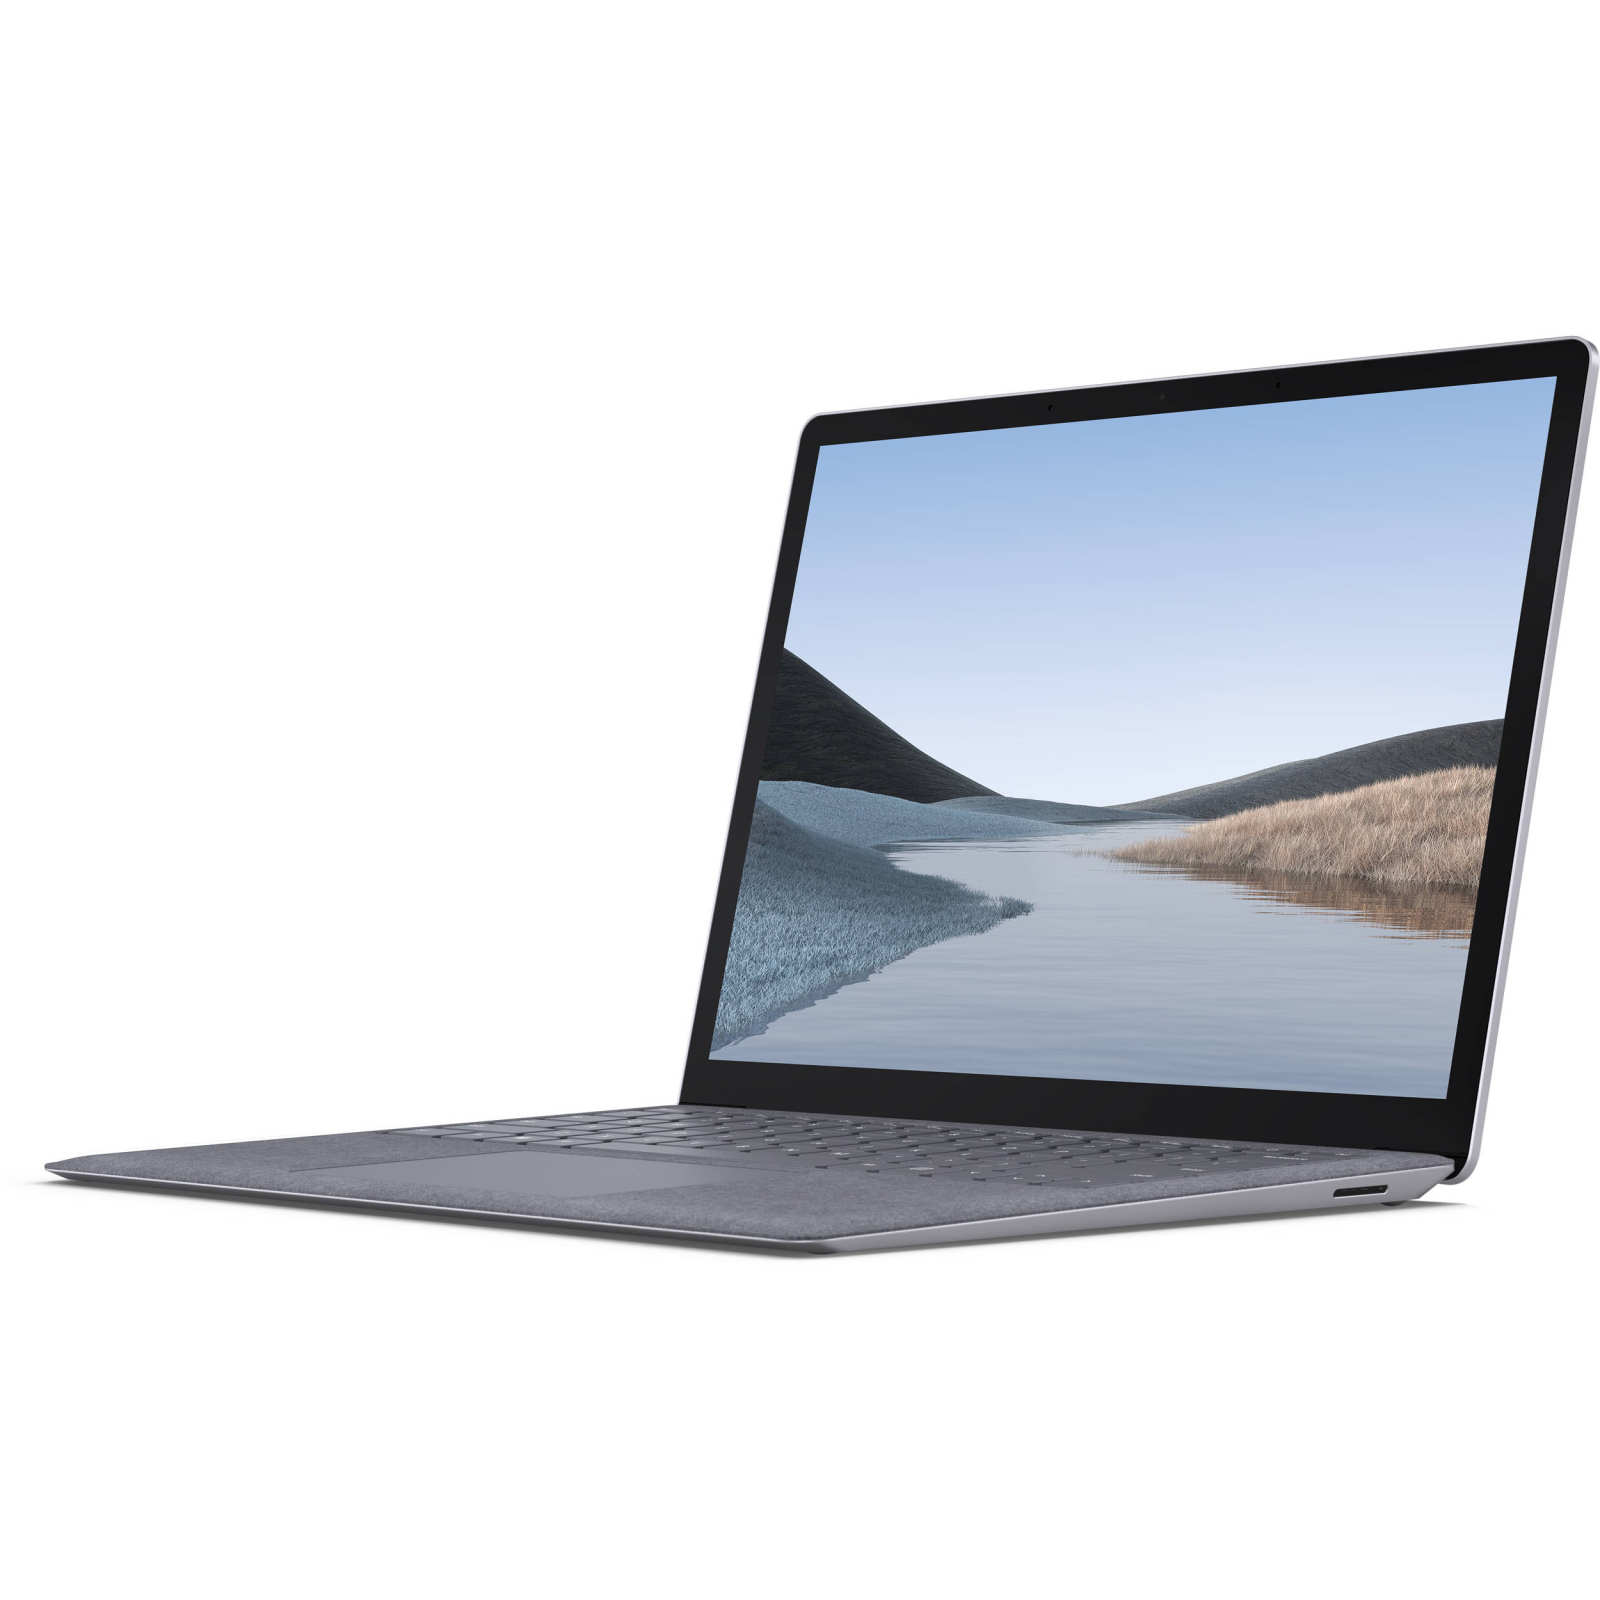 لپ تاپ 13 اینچی مایکروسافت Microsoft مدل Surface Laptop 3 - E